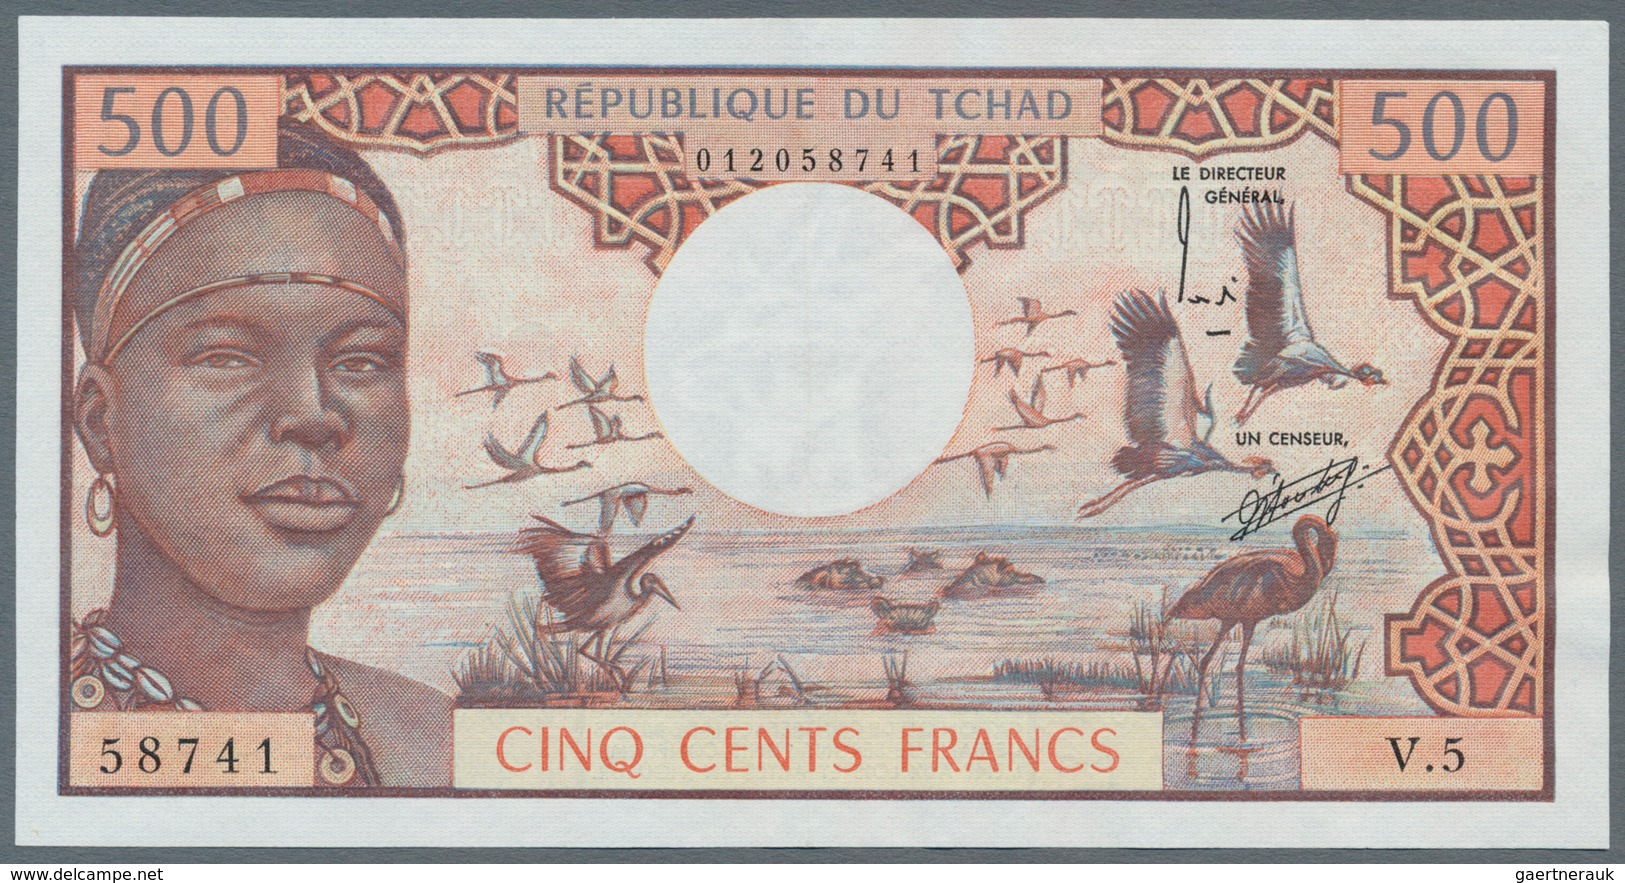 Chad / Tschad: 500 Francs ND(1974) P. 2, Crisp Original Apper, Original Colors, Light Handling In Pa - Chad